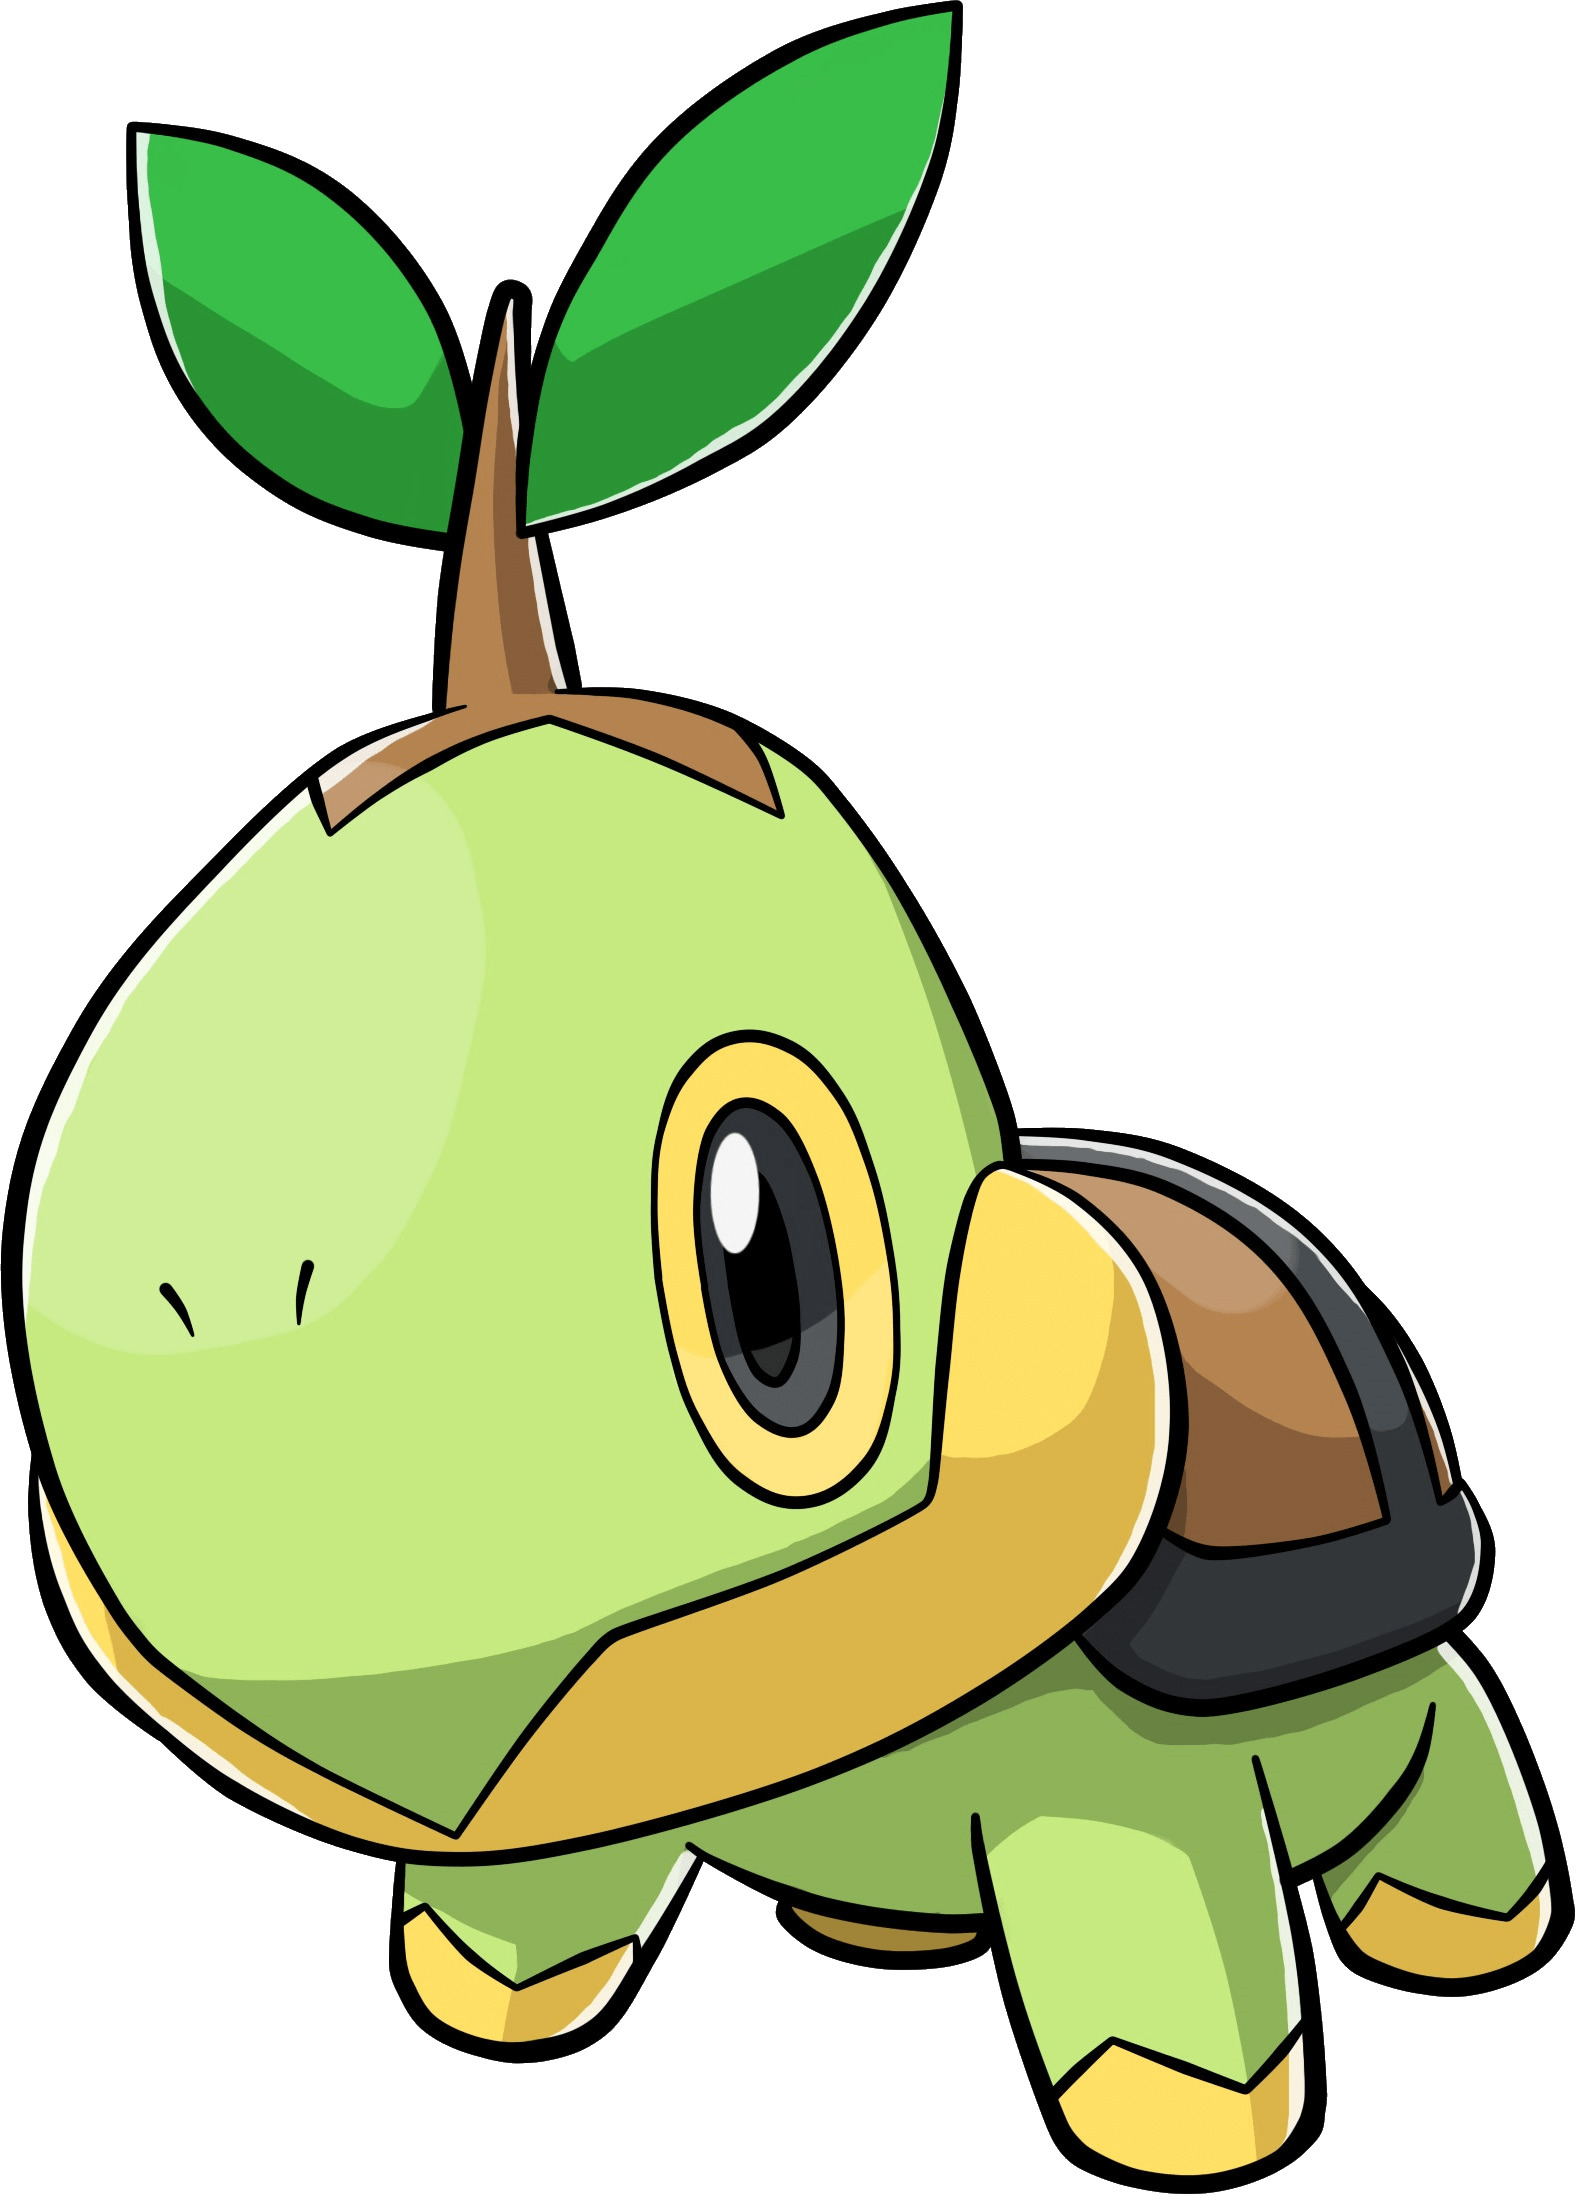 Turtwig Pokemon icons